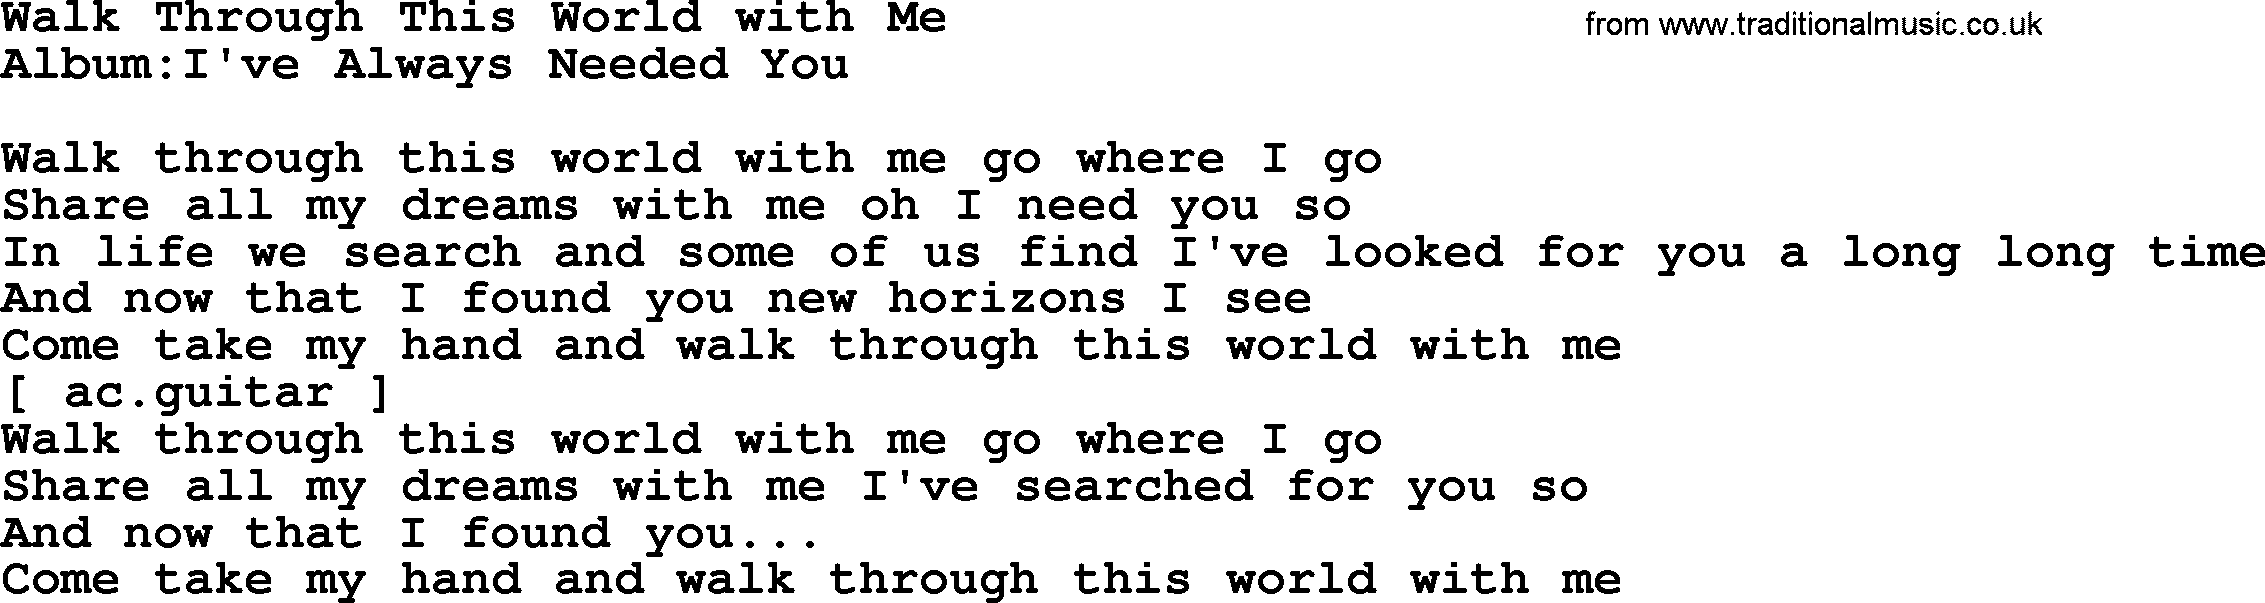 Emmylou Harris song: Walk Through This World with Me lyrics